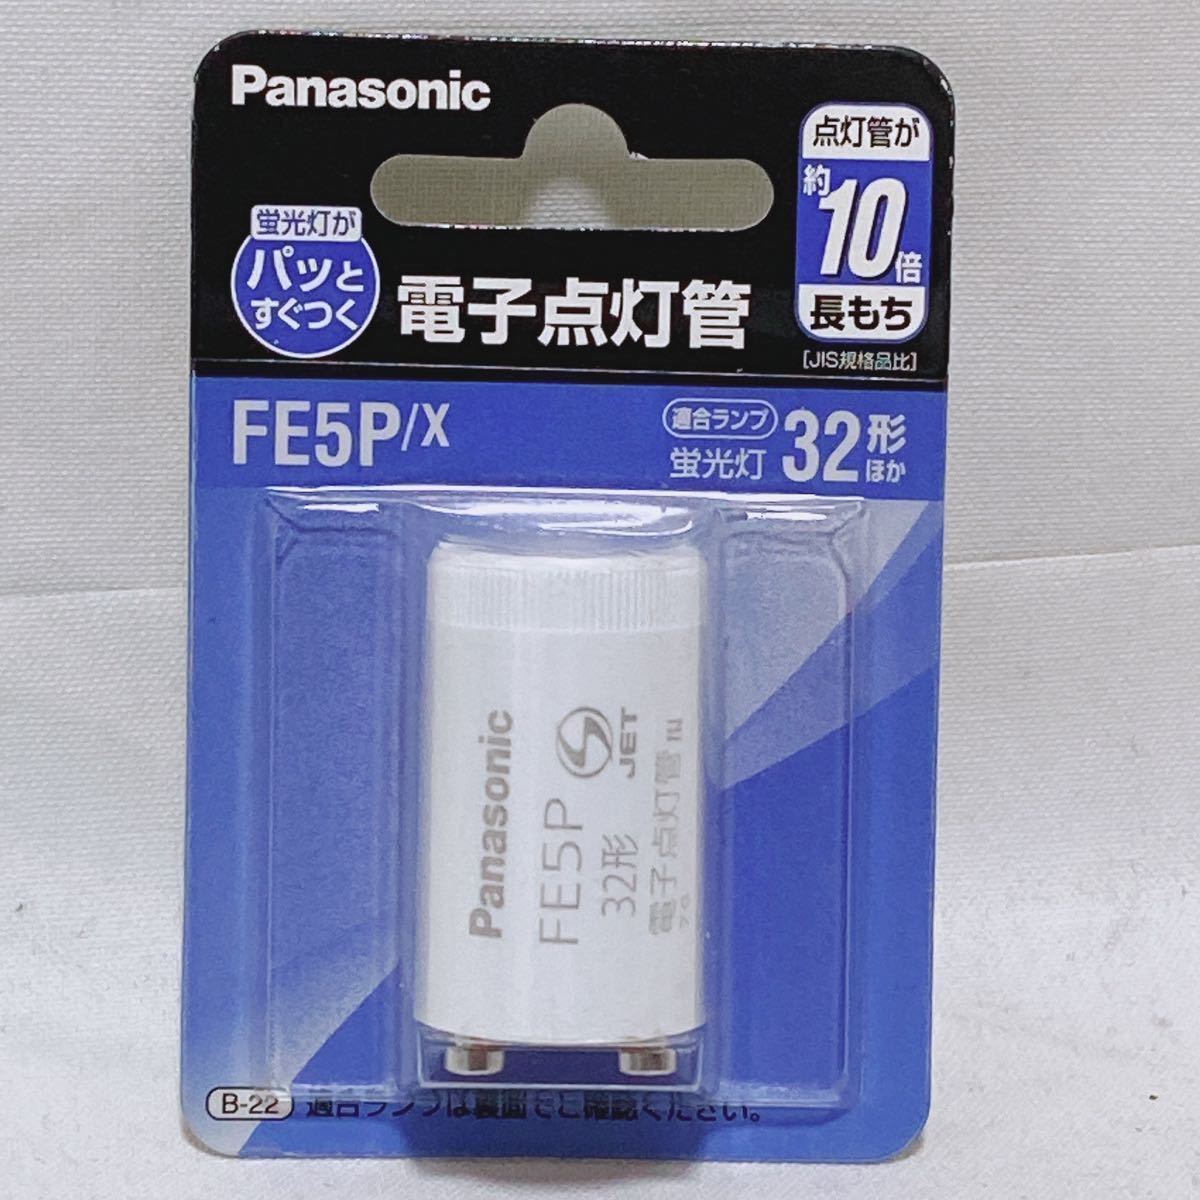 Panasonic 電子点灯管 FE5P/x 適合ランプ 蛍光灯32型ほか 35個まとめ R-855_画像2